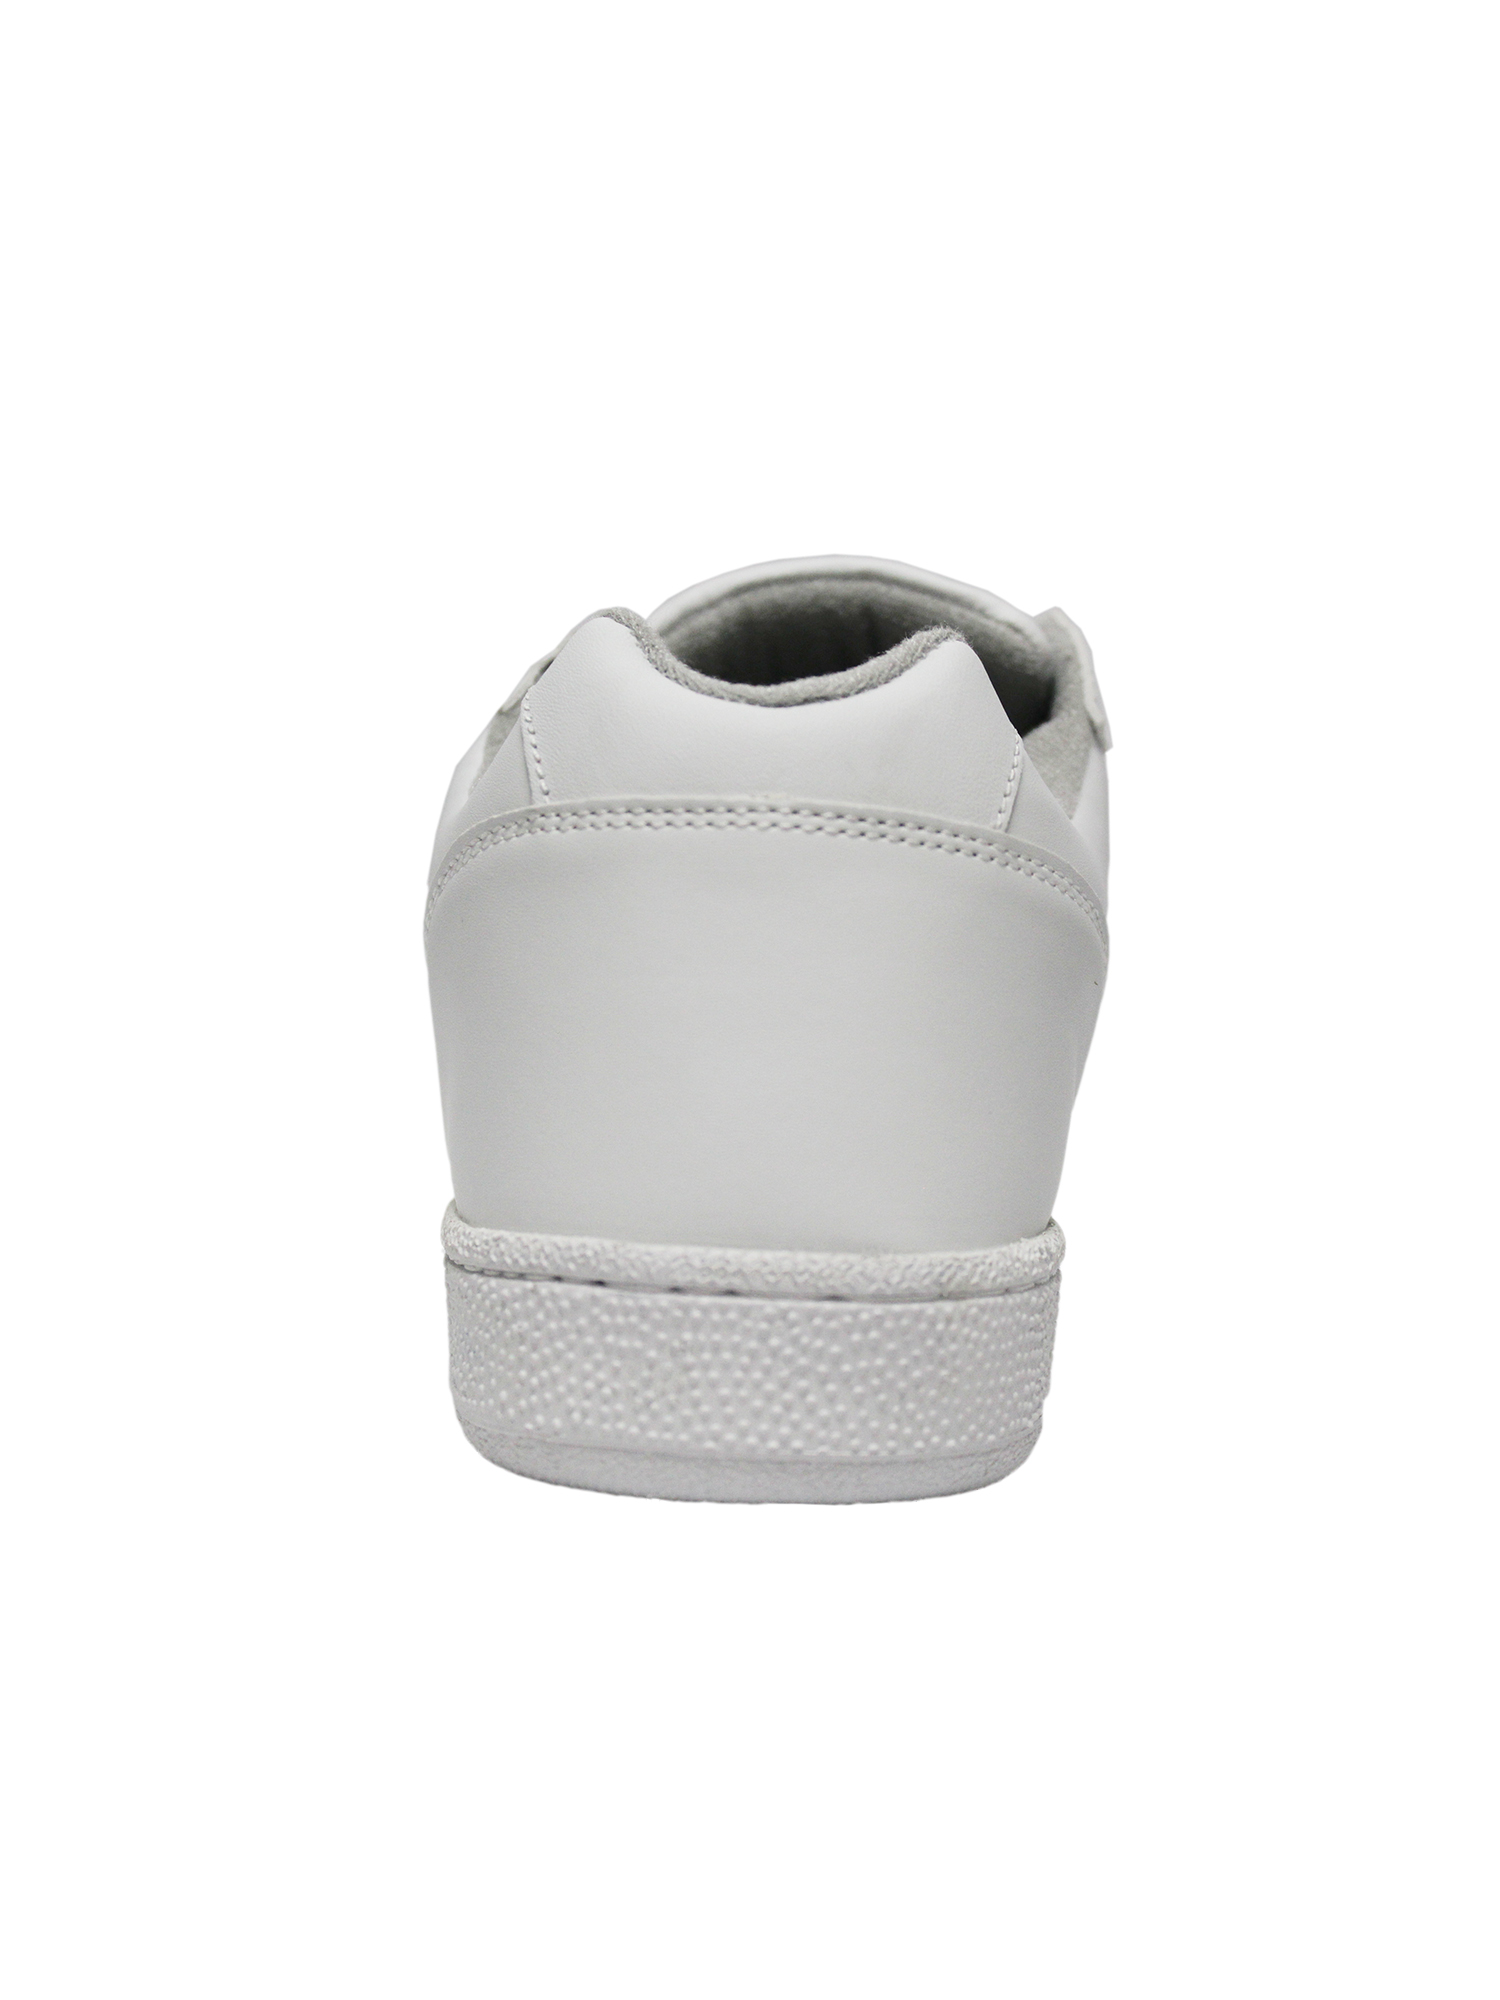 Tanleewa Men's Leather Strap Sneakers Lightweight Hook and Loop Walking Shoe Size 10.5 Adult Male - image 5 of 5